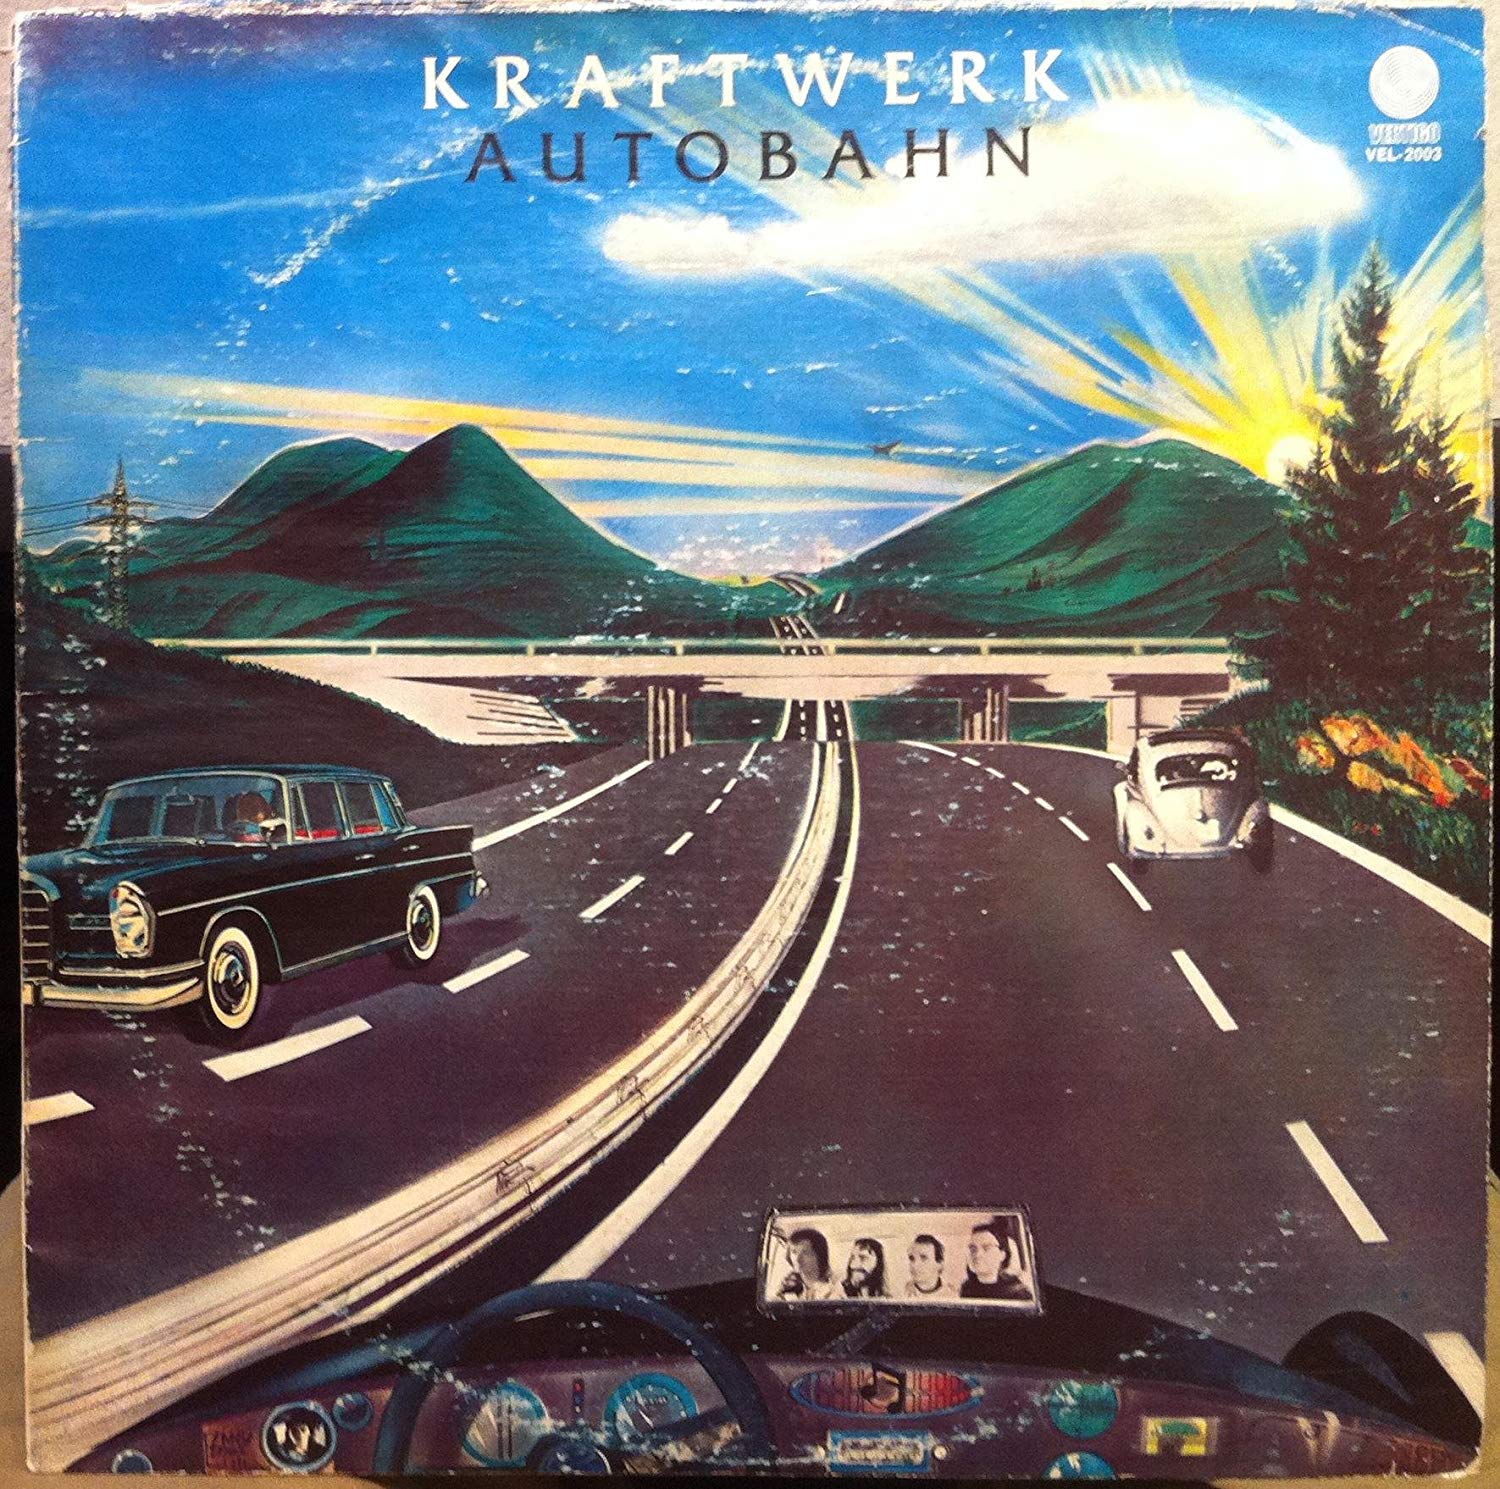 Kraftwerk Autobahn album cover